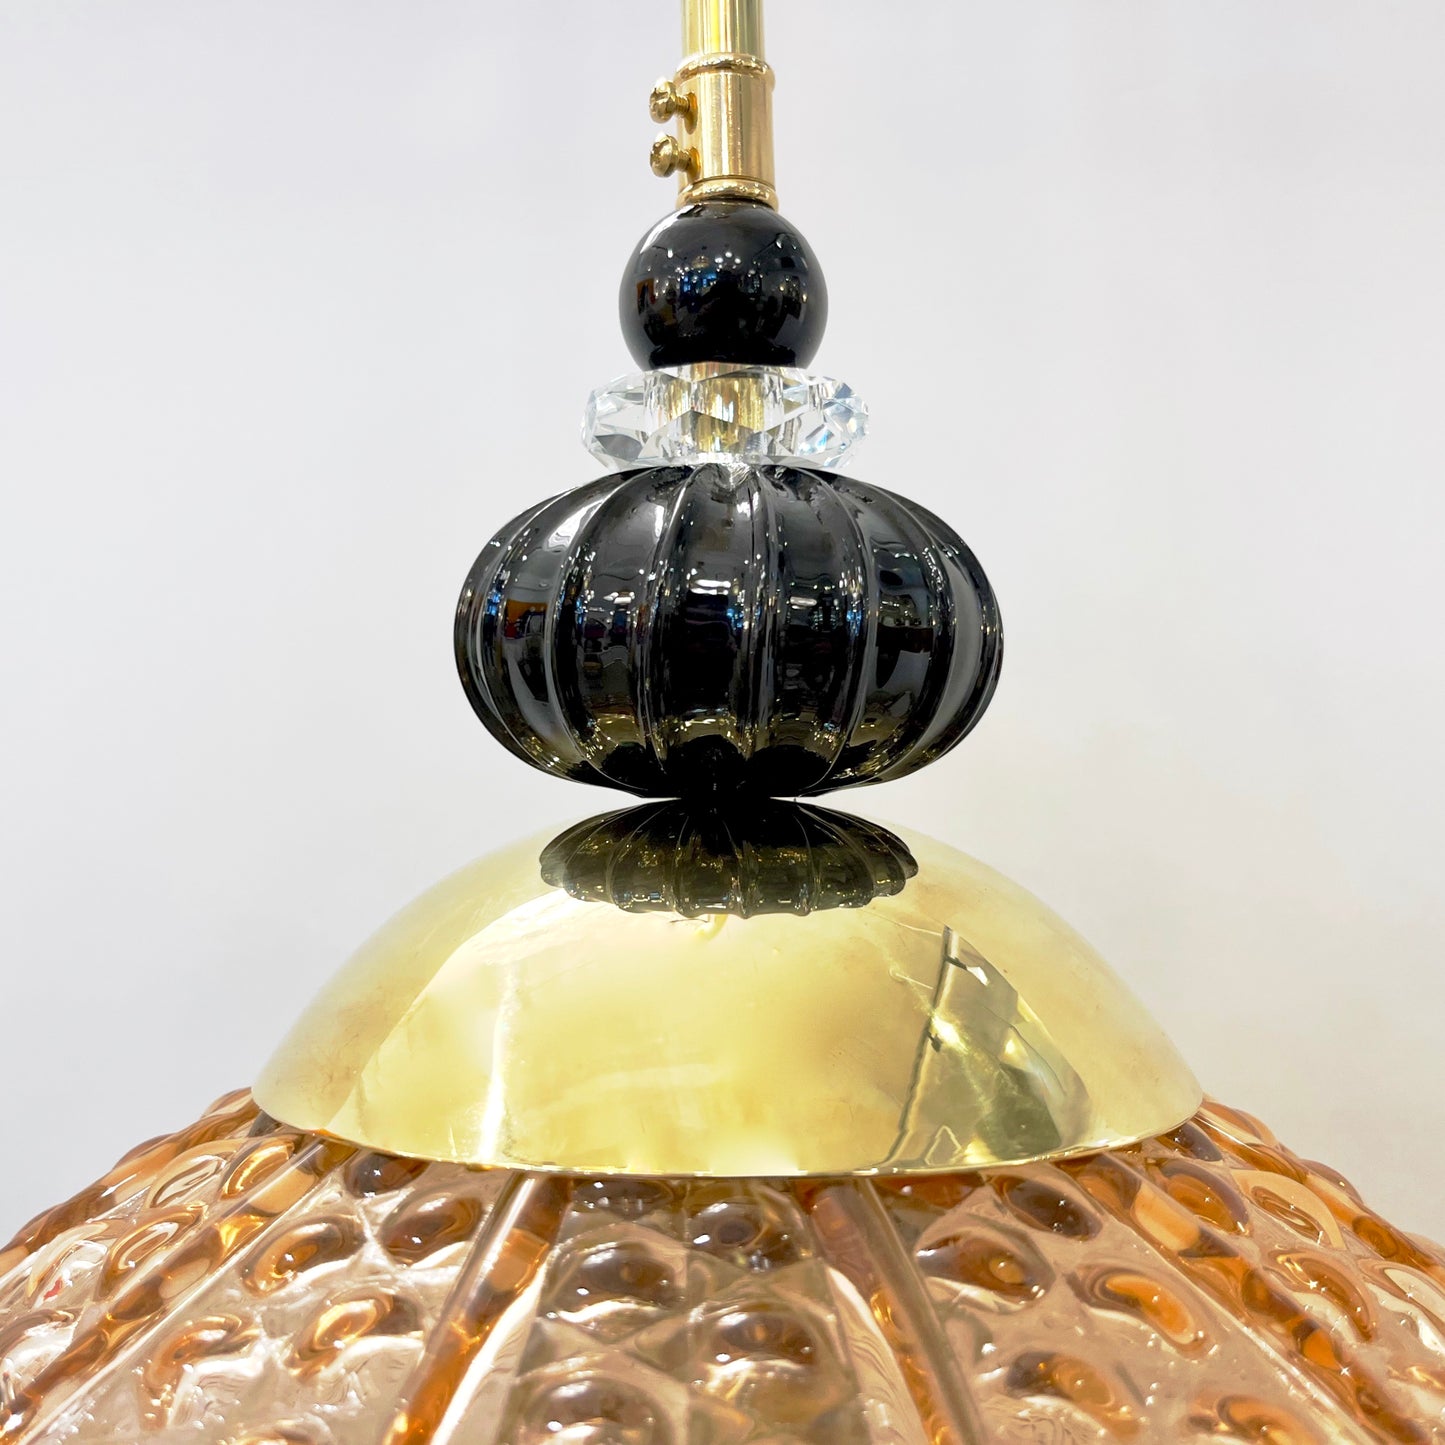 Bespoke Italian Oval Black and Pink Crystal Murano Glass Brass Egg Pendant Light